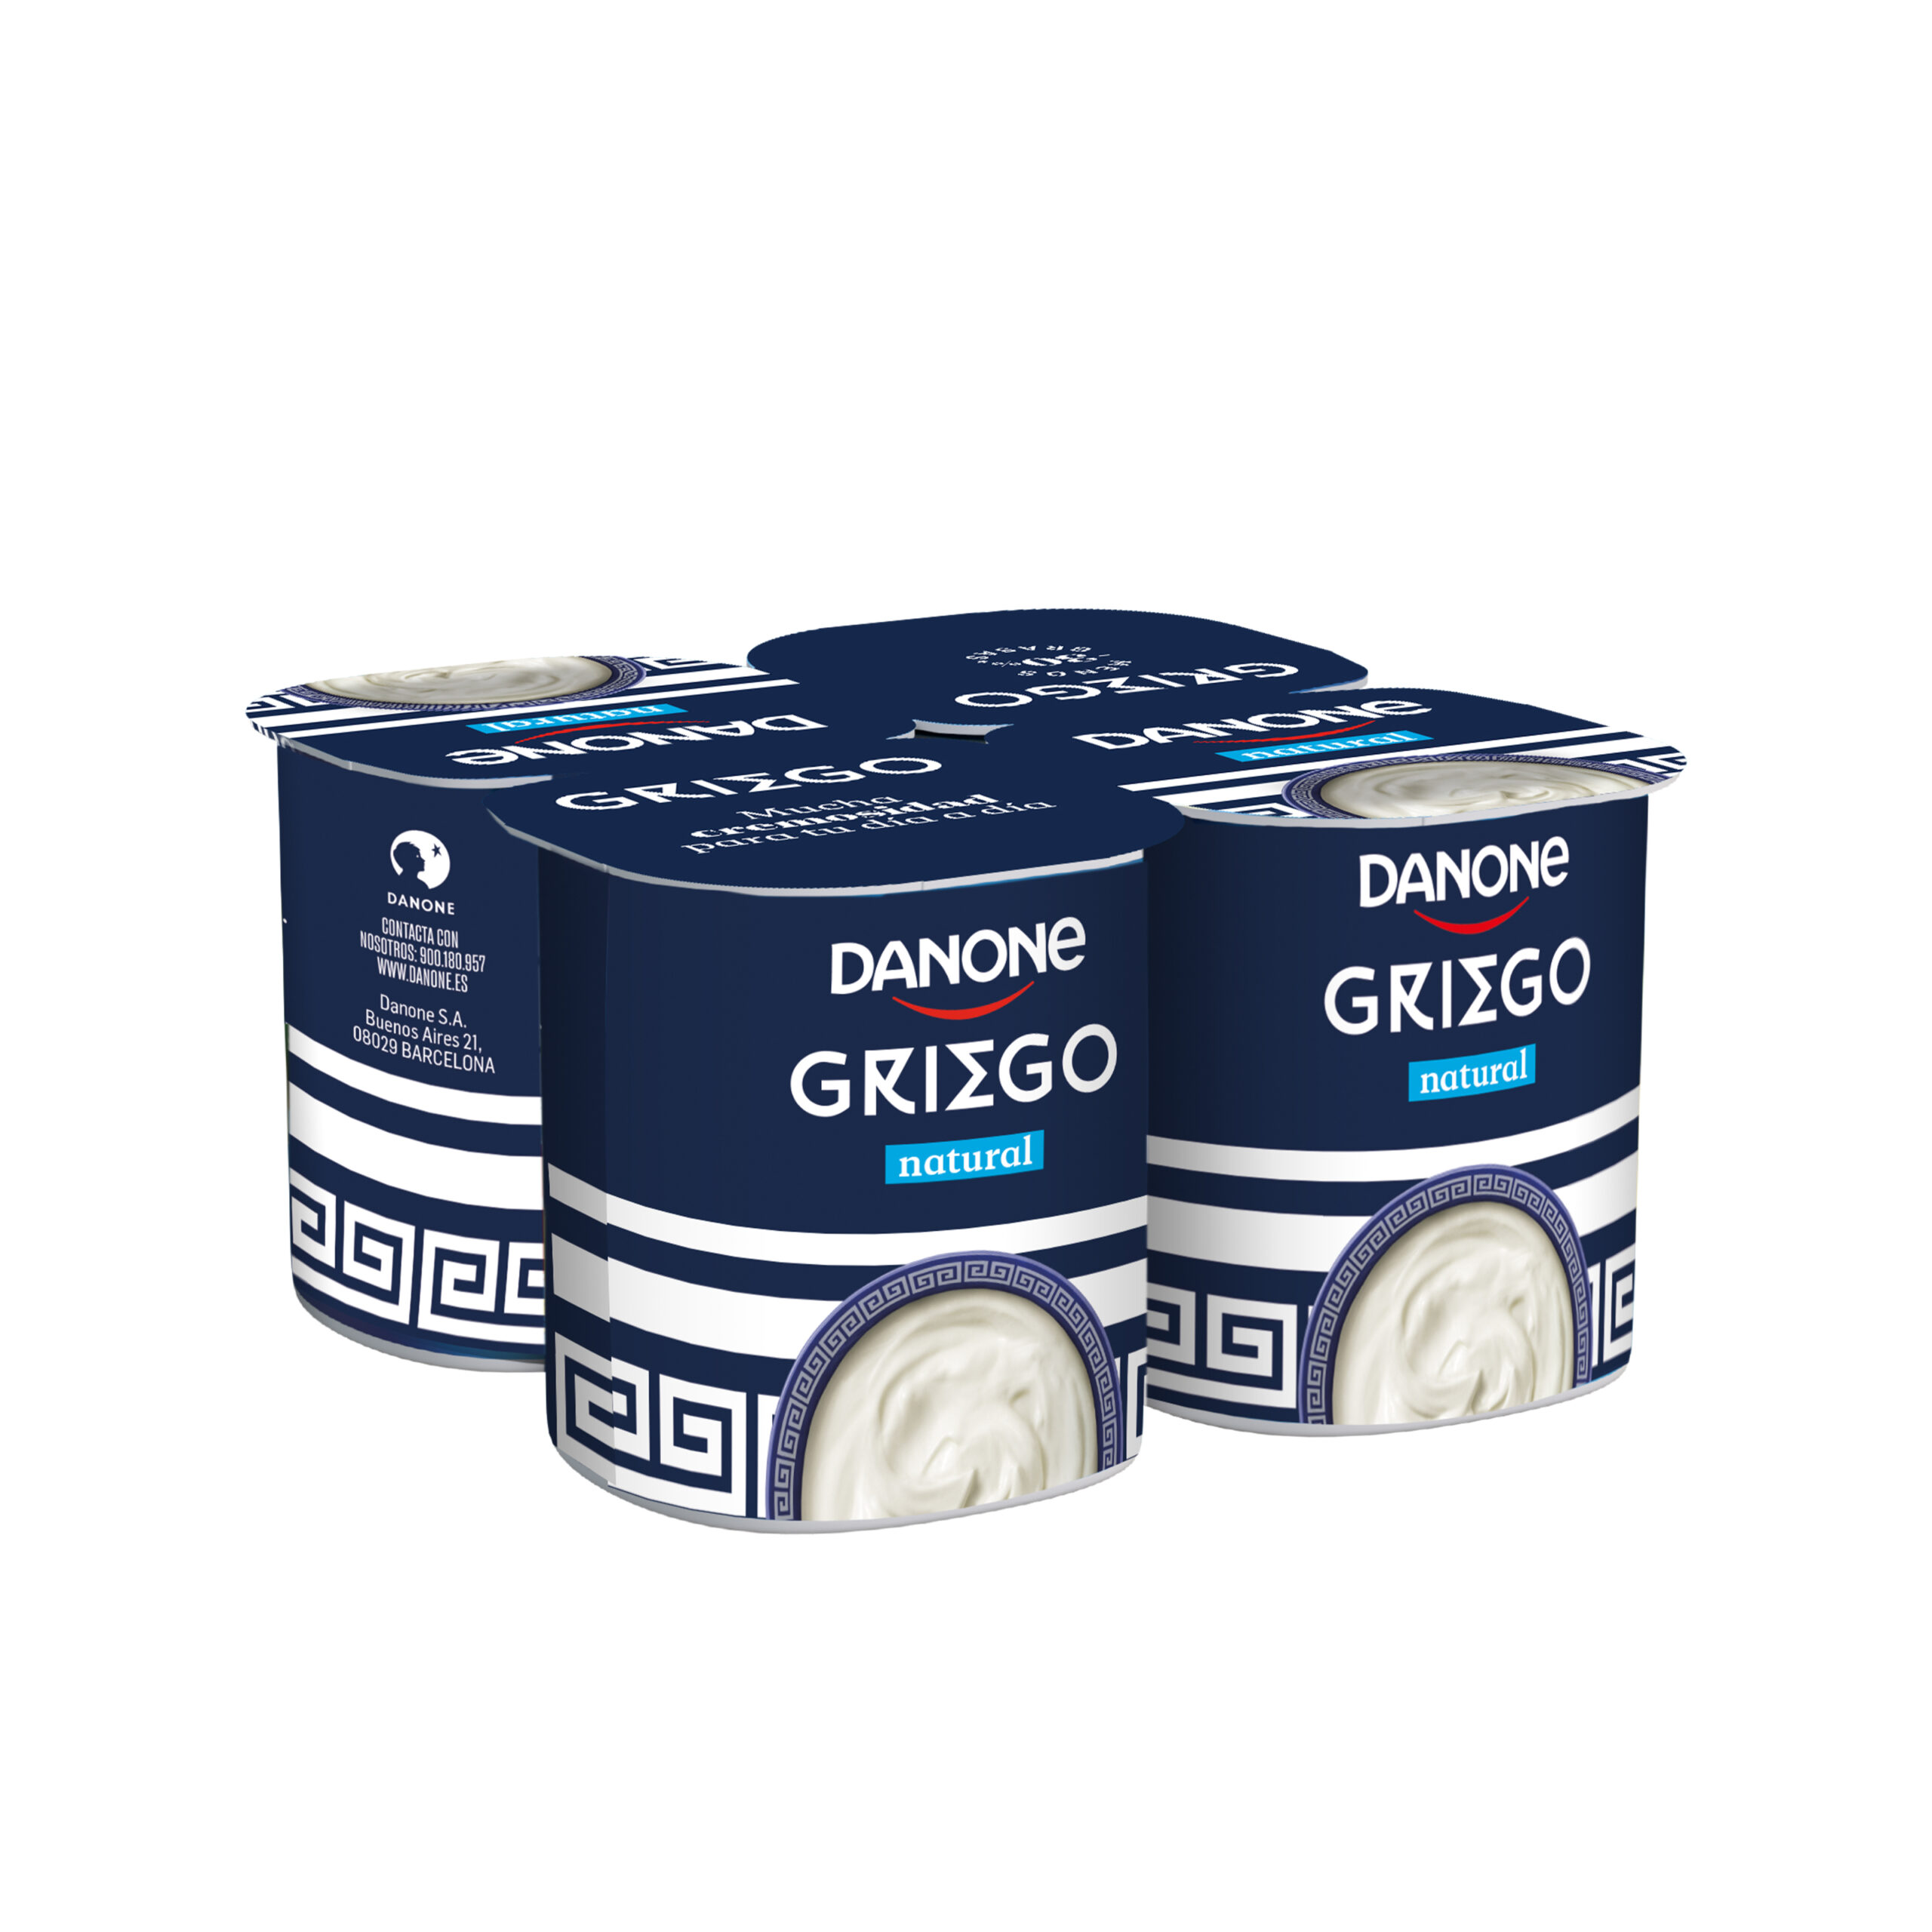 Yogurt griego Danone natural sin azúcar 650 g